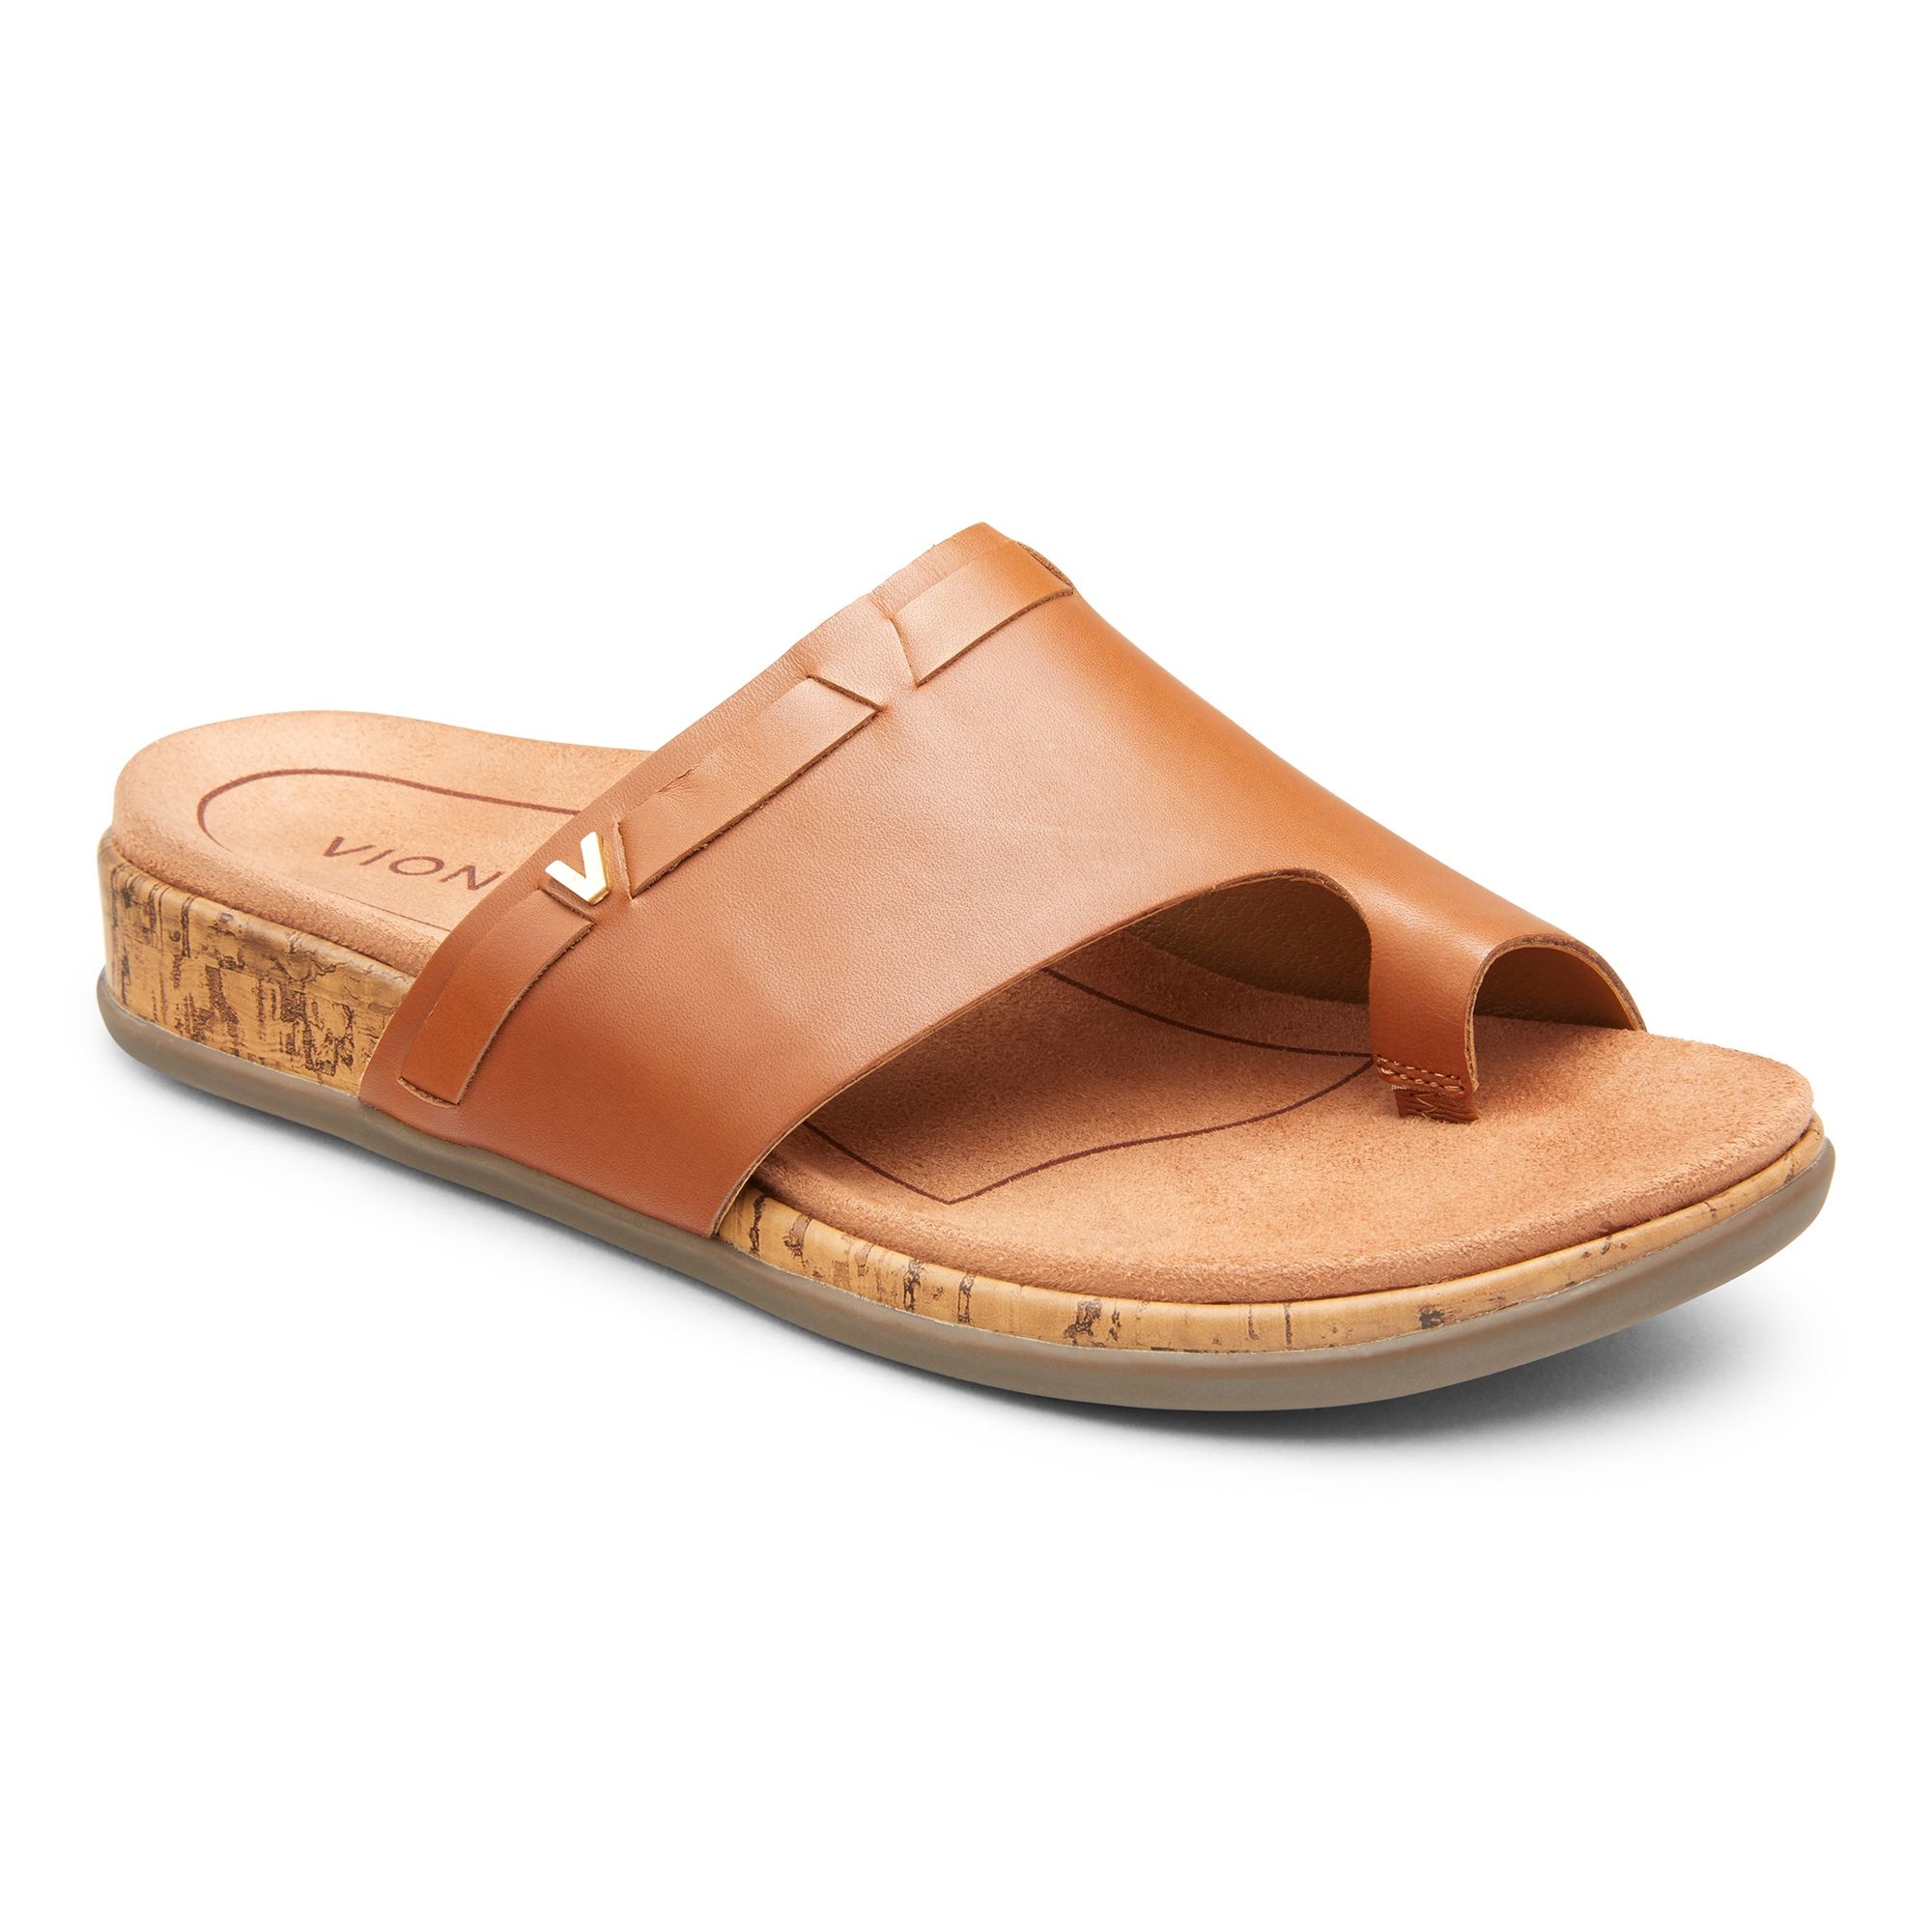 Vionic Leather Toe-Loop Sandals Cindy Tan